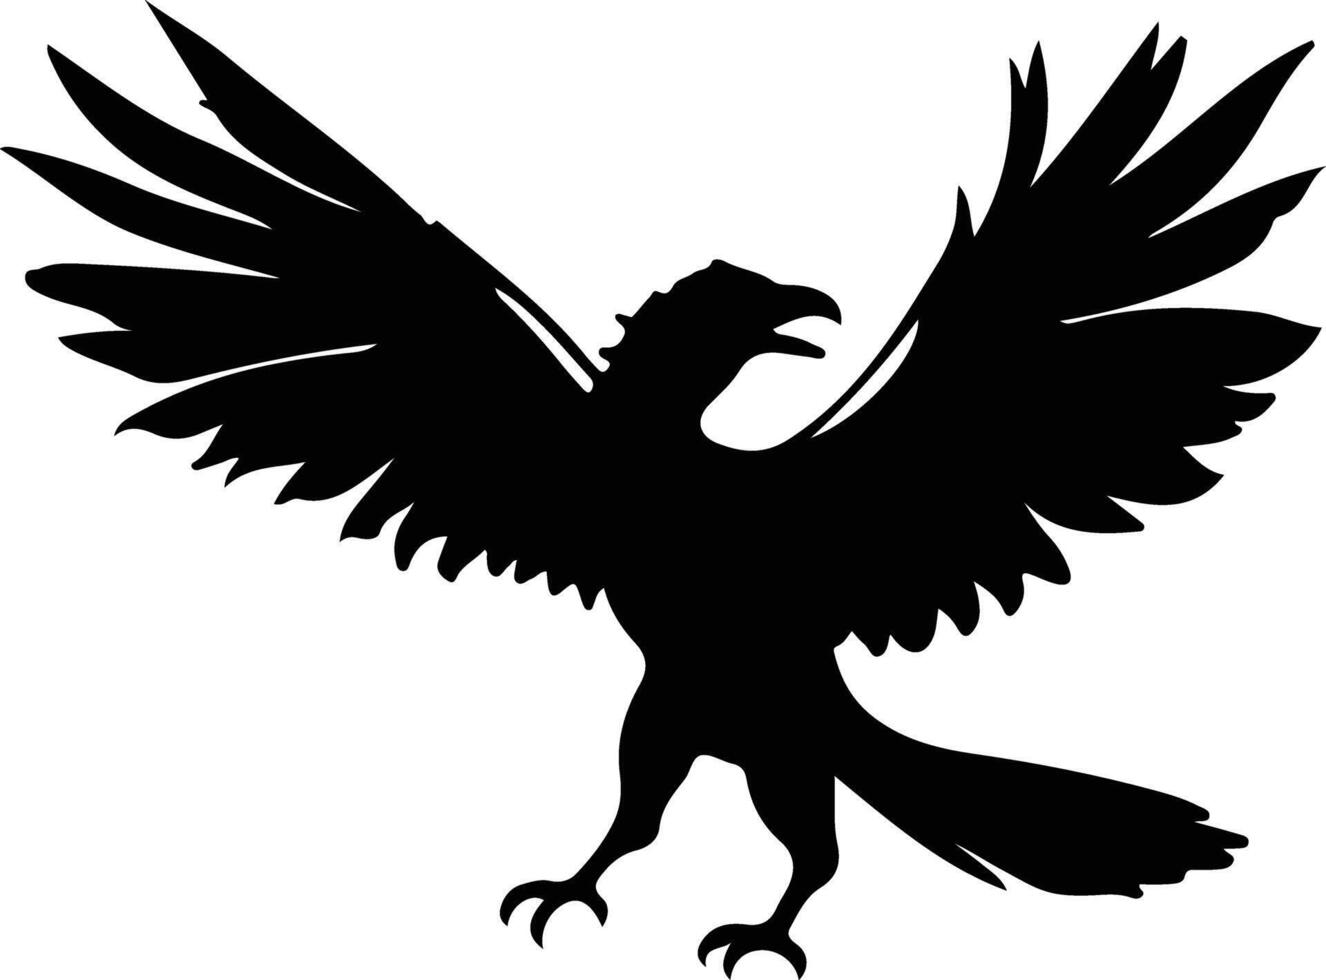 Archaeopteryx schwarz Silhouette vektor